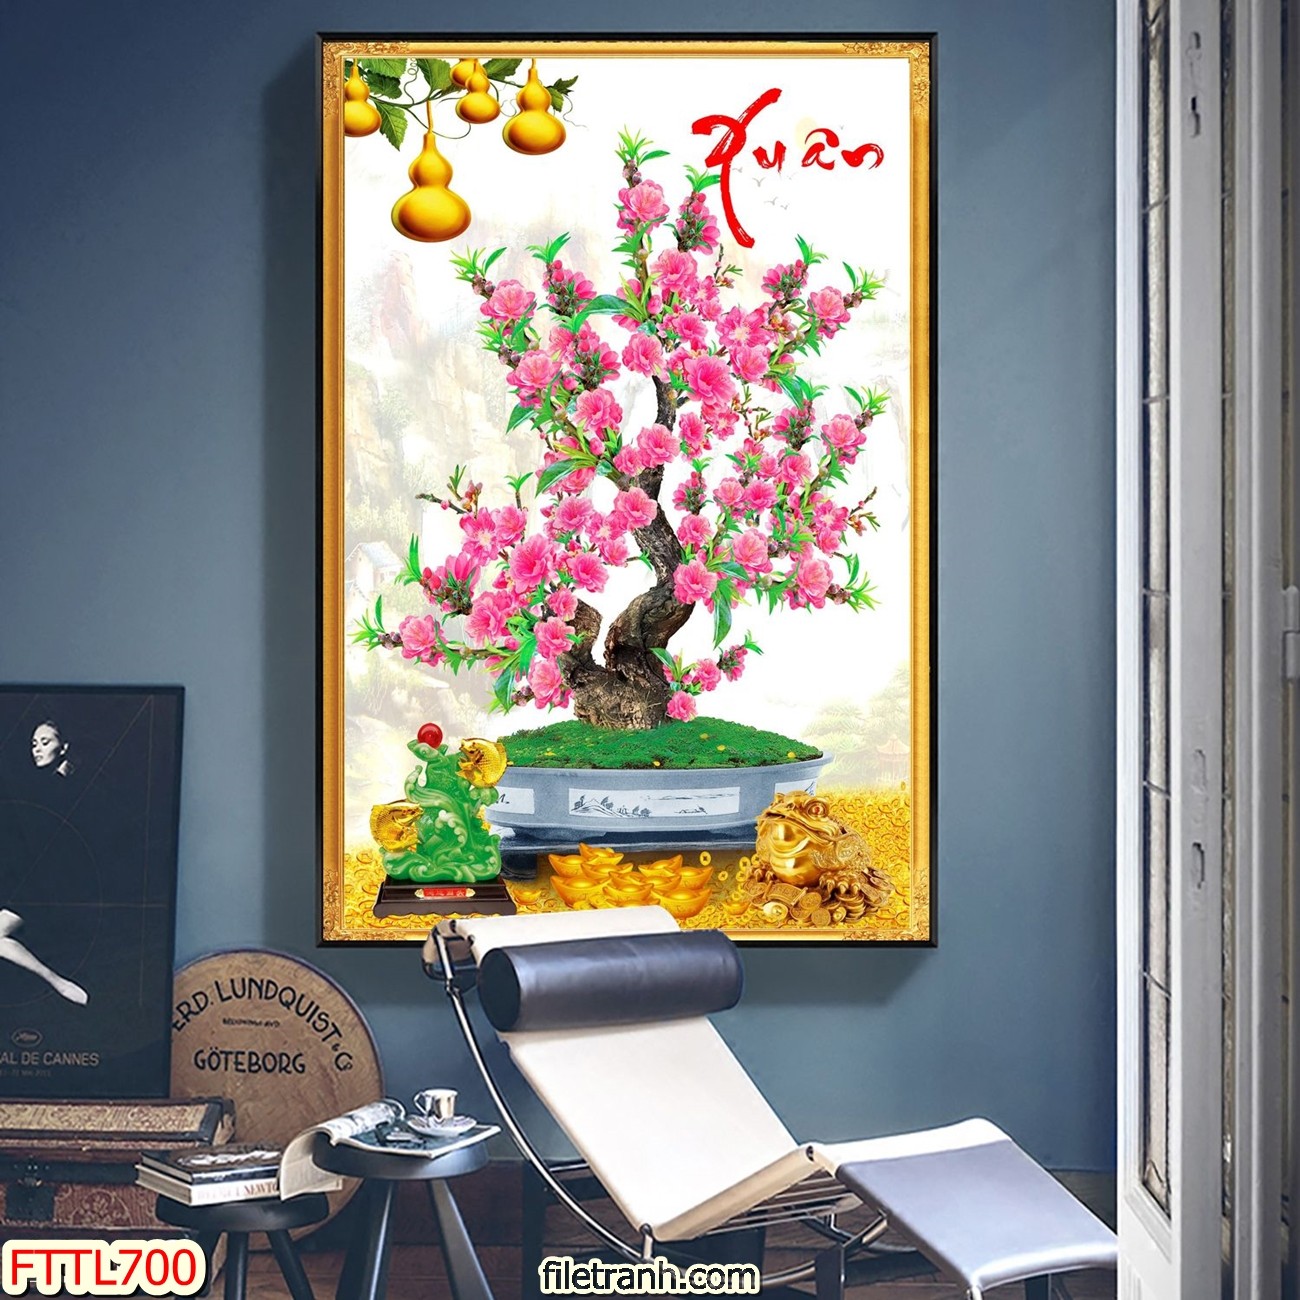 https://filetranh.com/file-tranh-chau-mai-bonsai/file-tranh-chau-mai-bonsai-fttl700.html